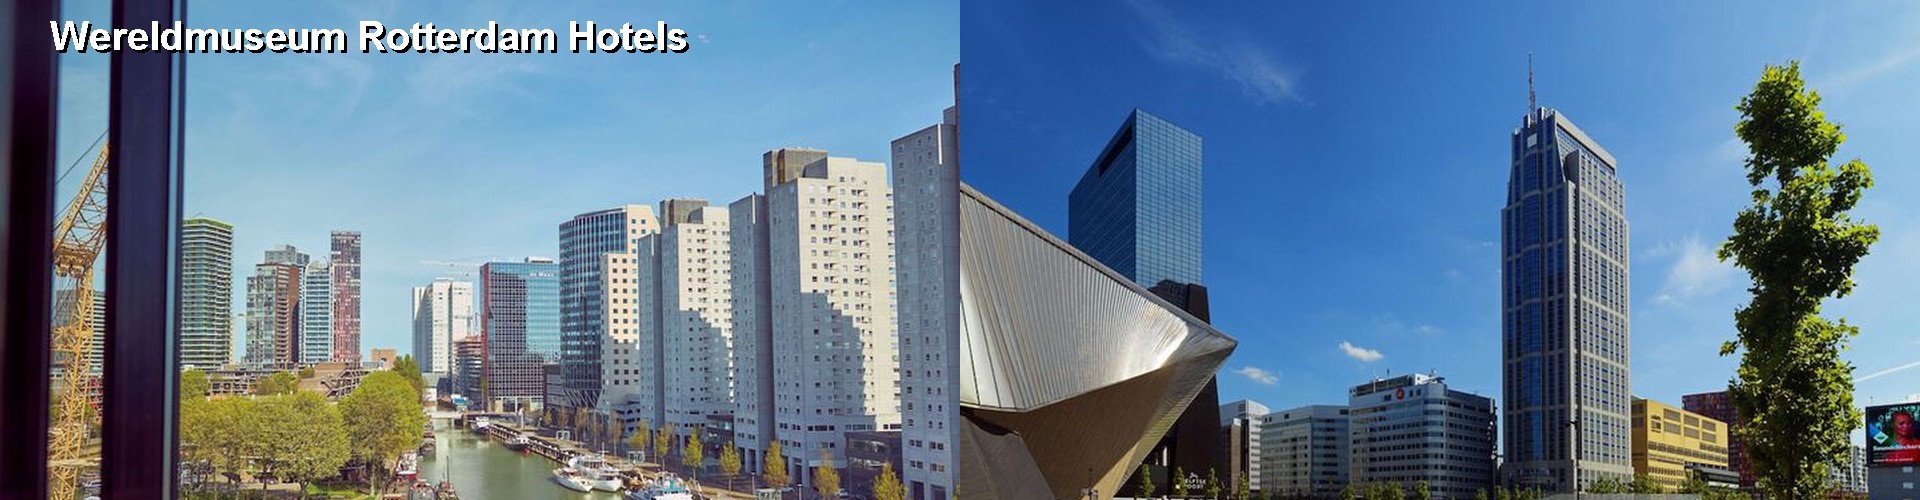 5 Best Hotels near Wereldmuseum Rotterdam